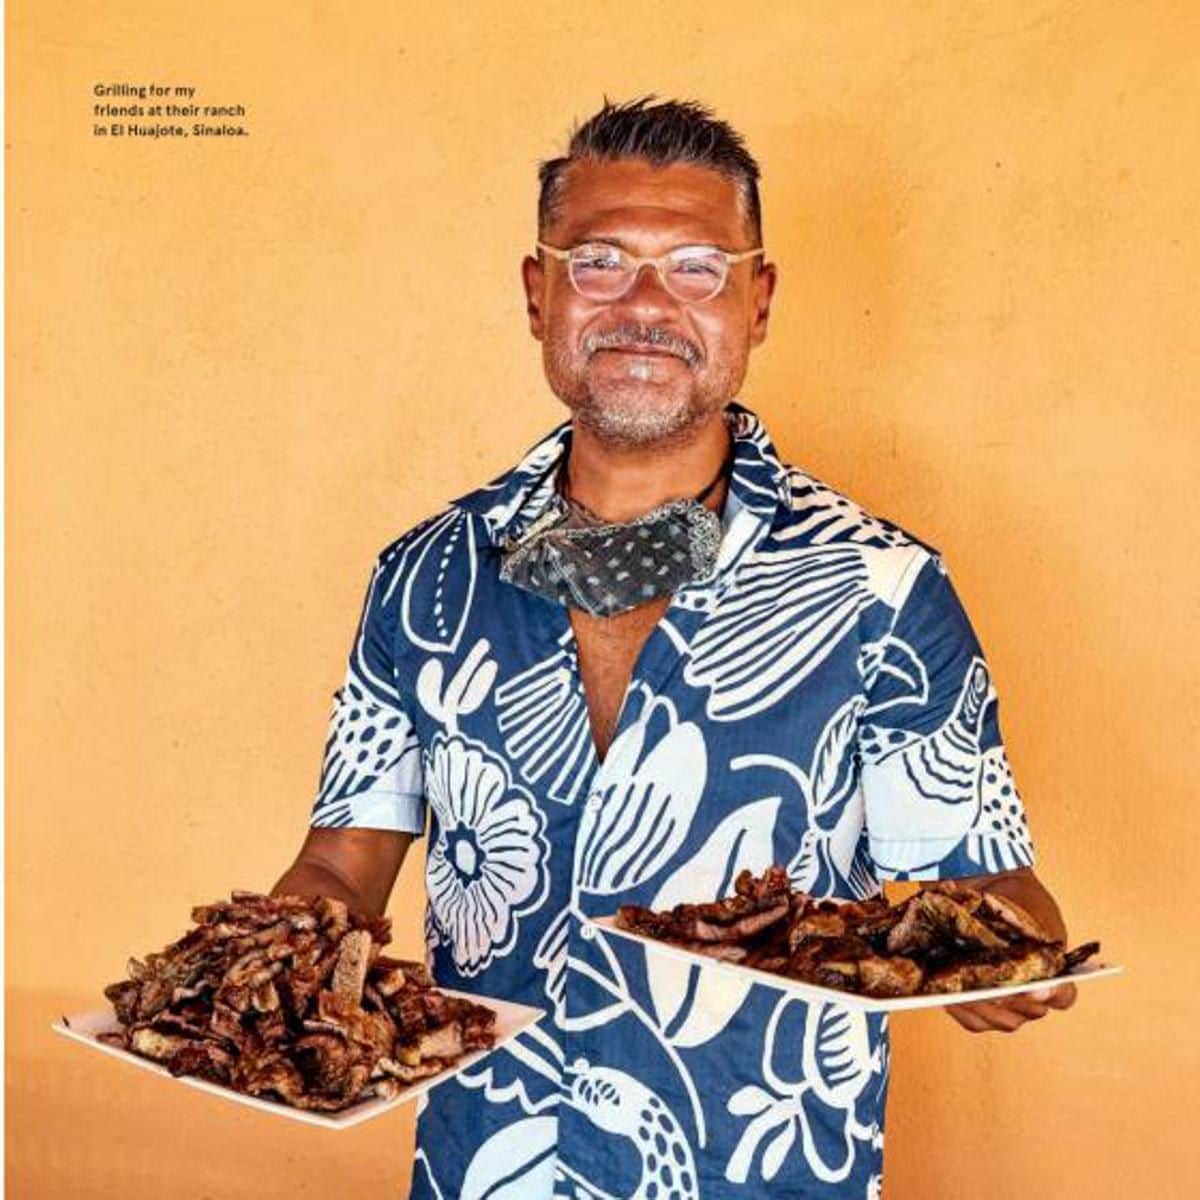 Rick Martínez releases debut cookbook on Mexican cuisine ‘Mi Cocina’